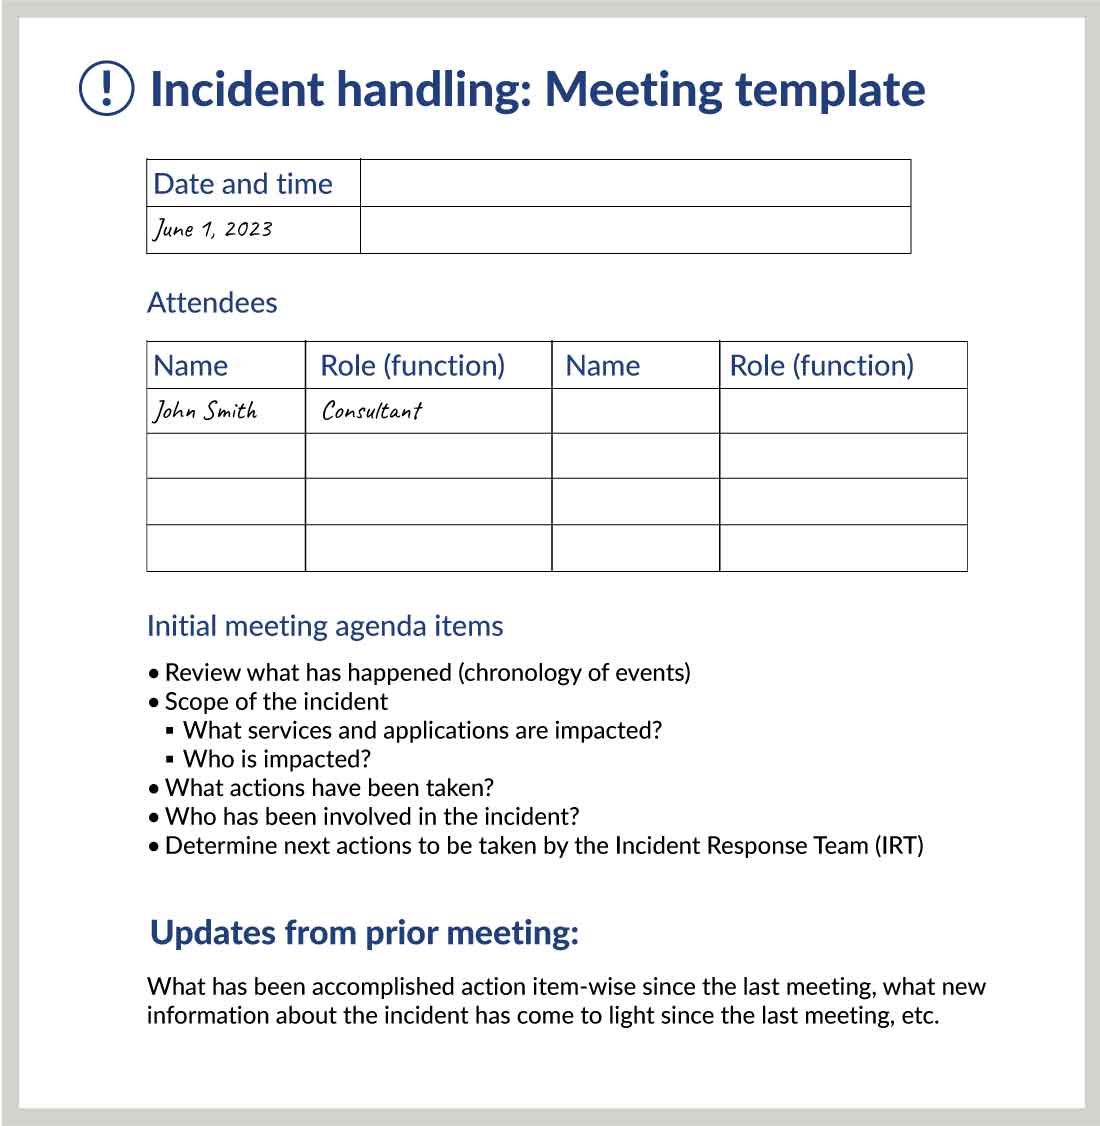 Sample incident handling meeting template.